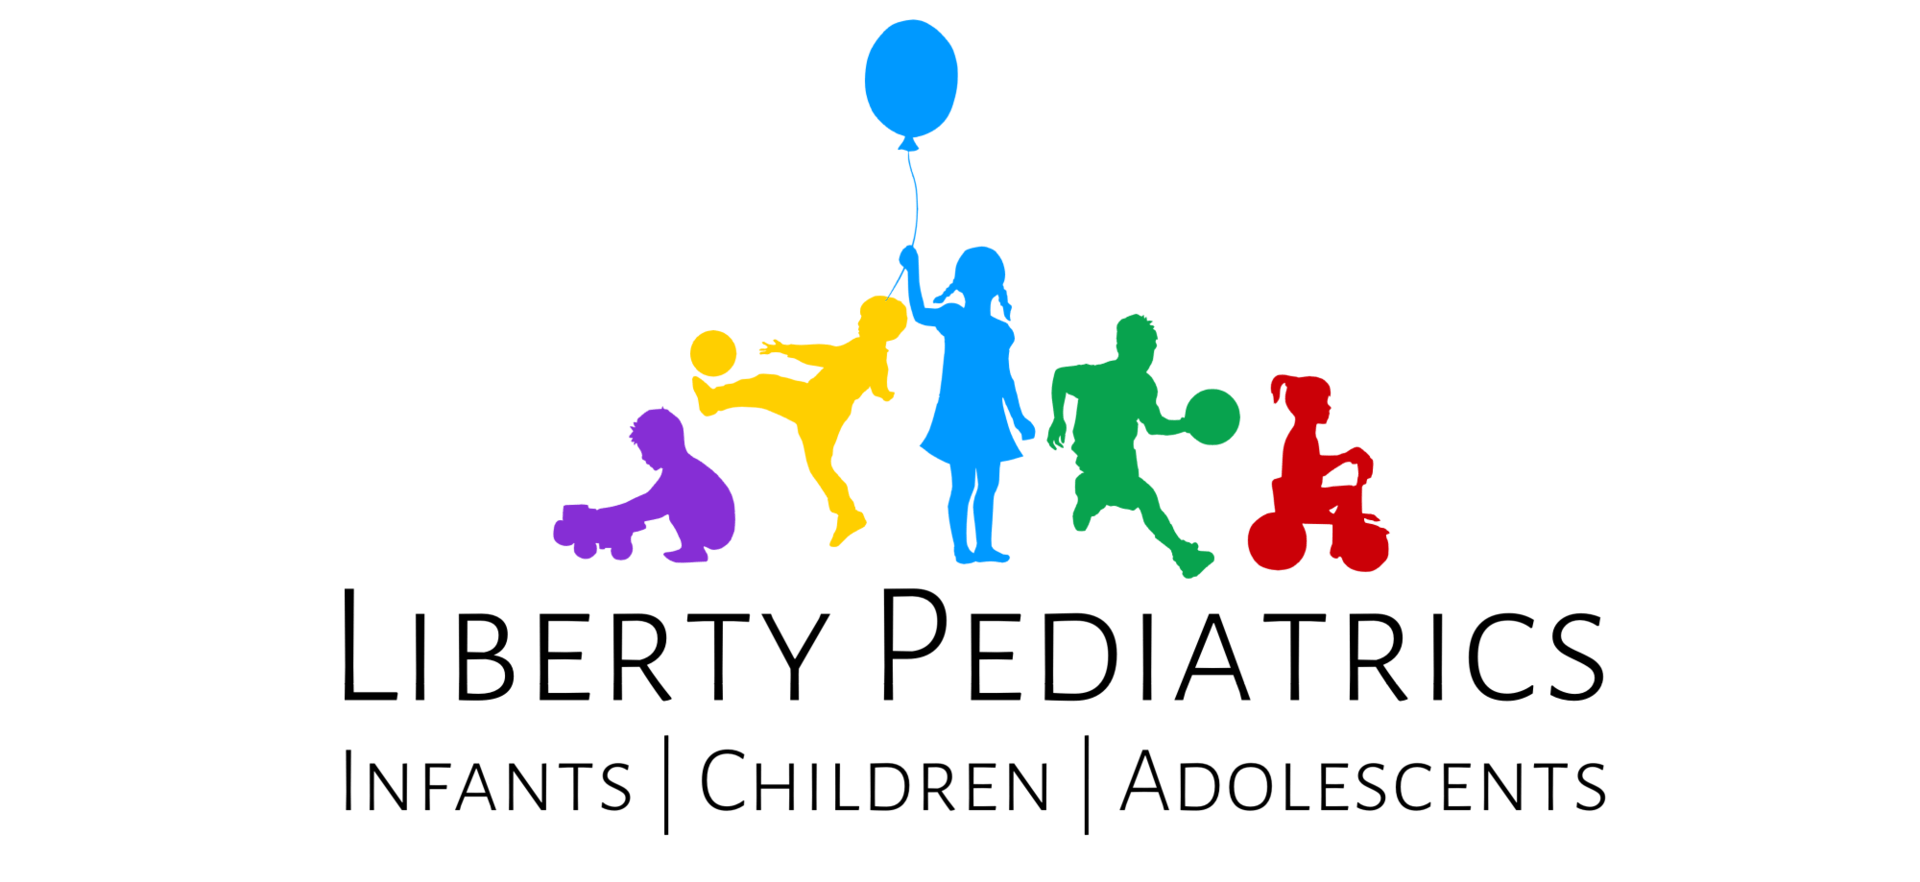 Pediatrics Logo - Pediatric Medical Care. Liberty Pediatrics. Liberty Park, Alabama